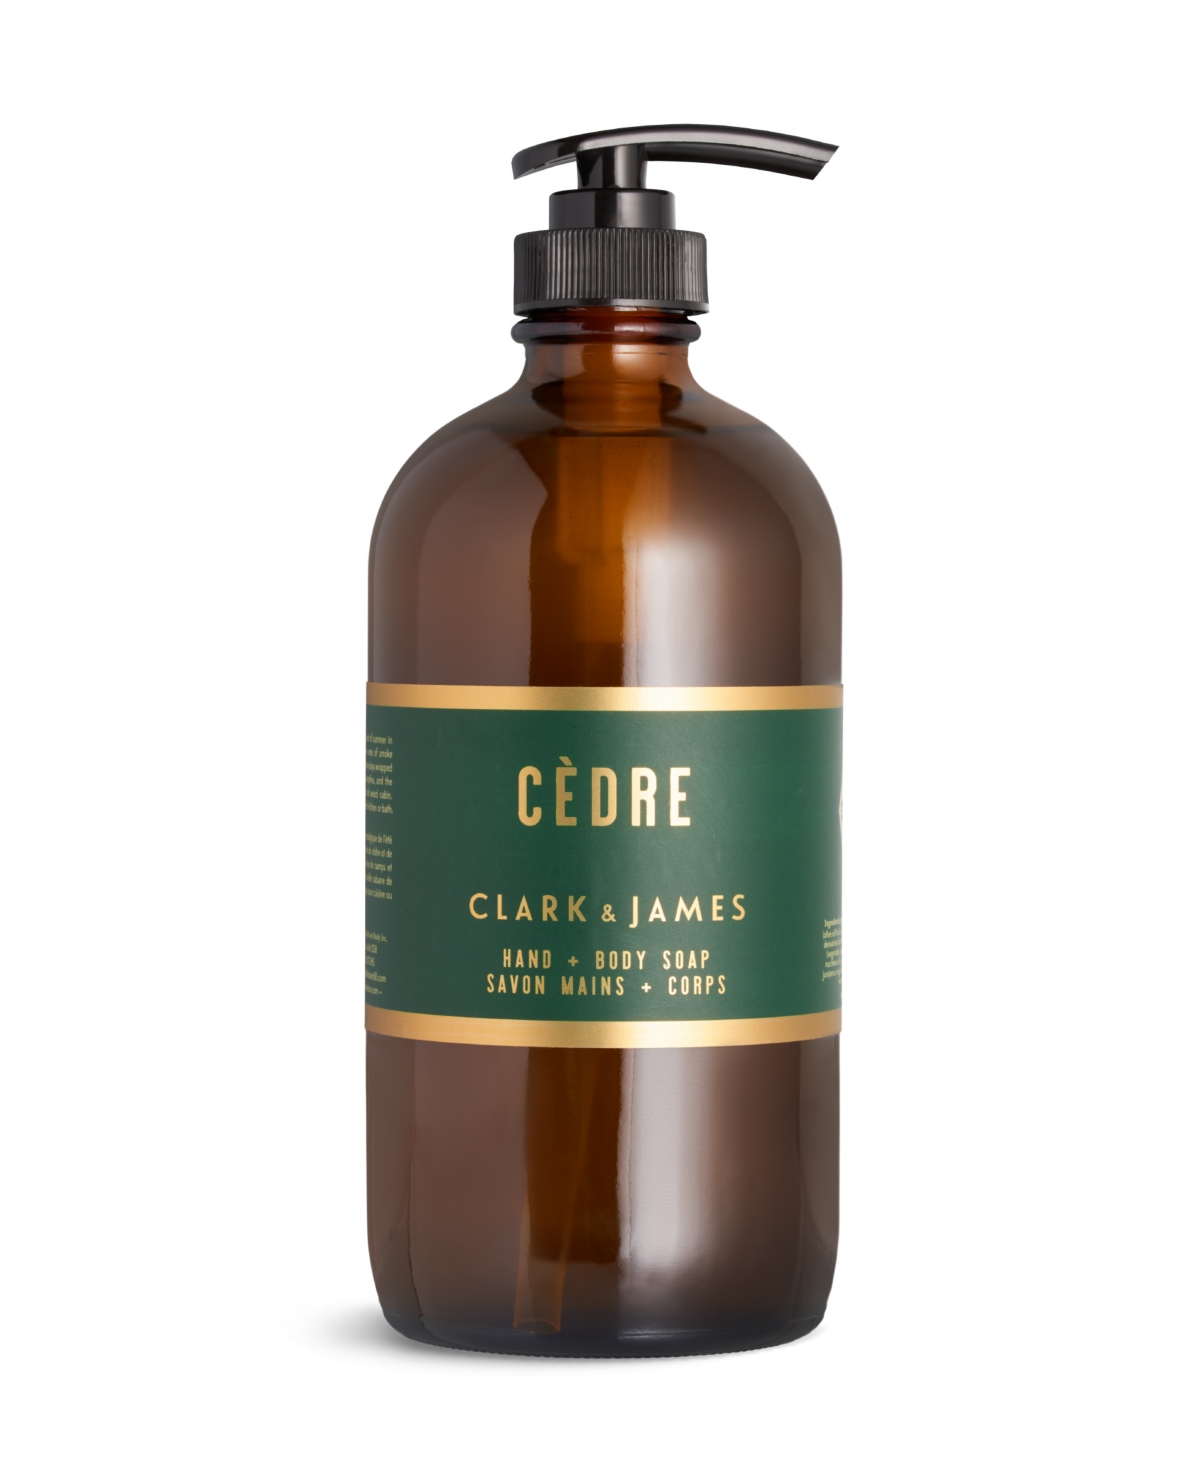 Clark & James Cedre Hand Soap